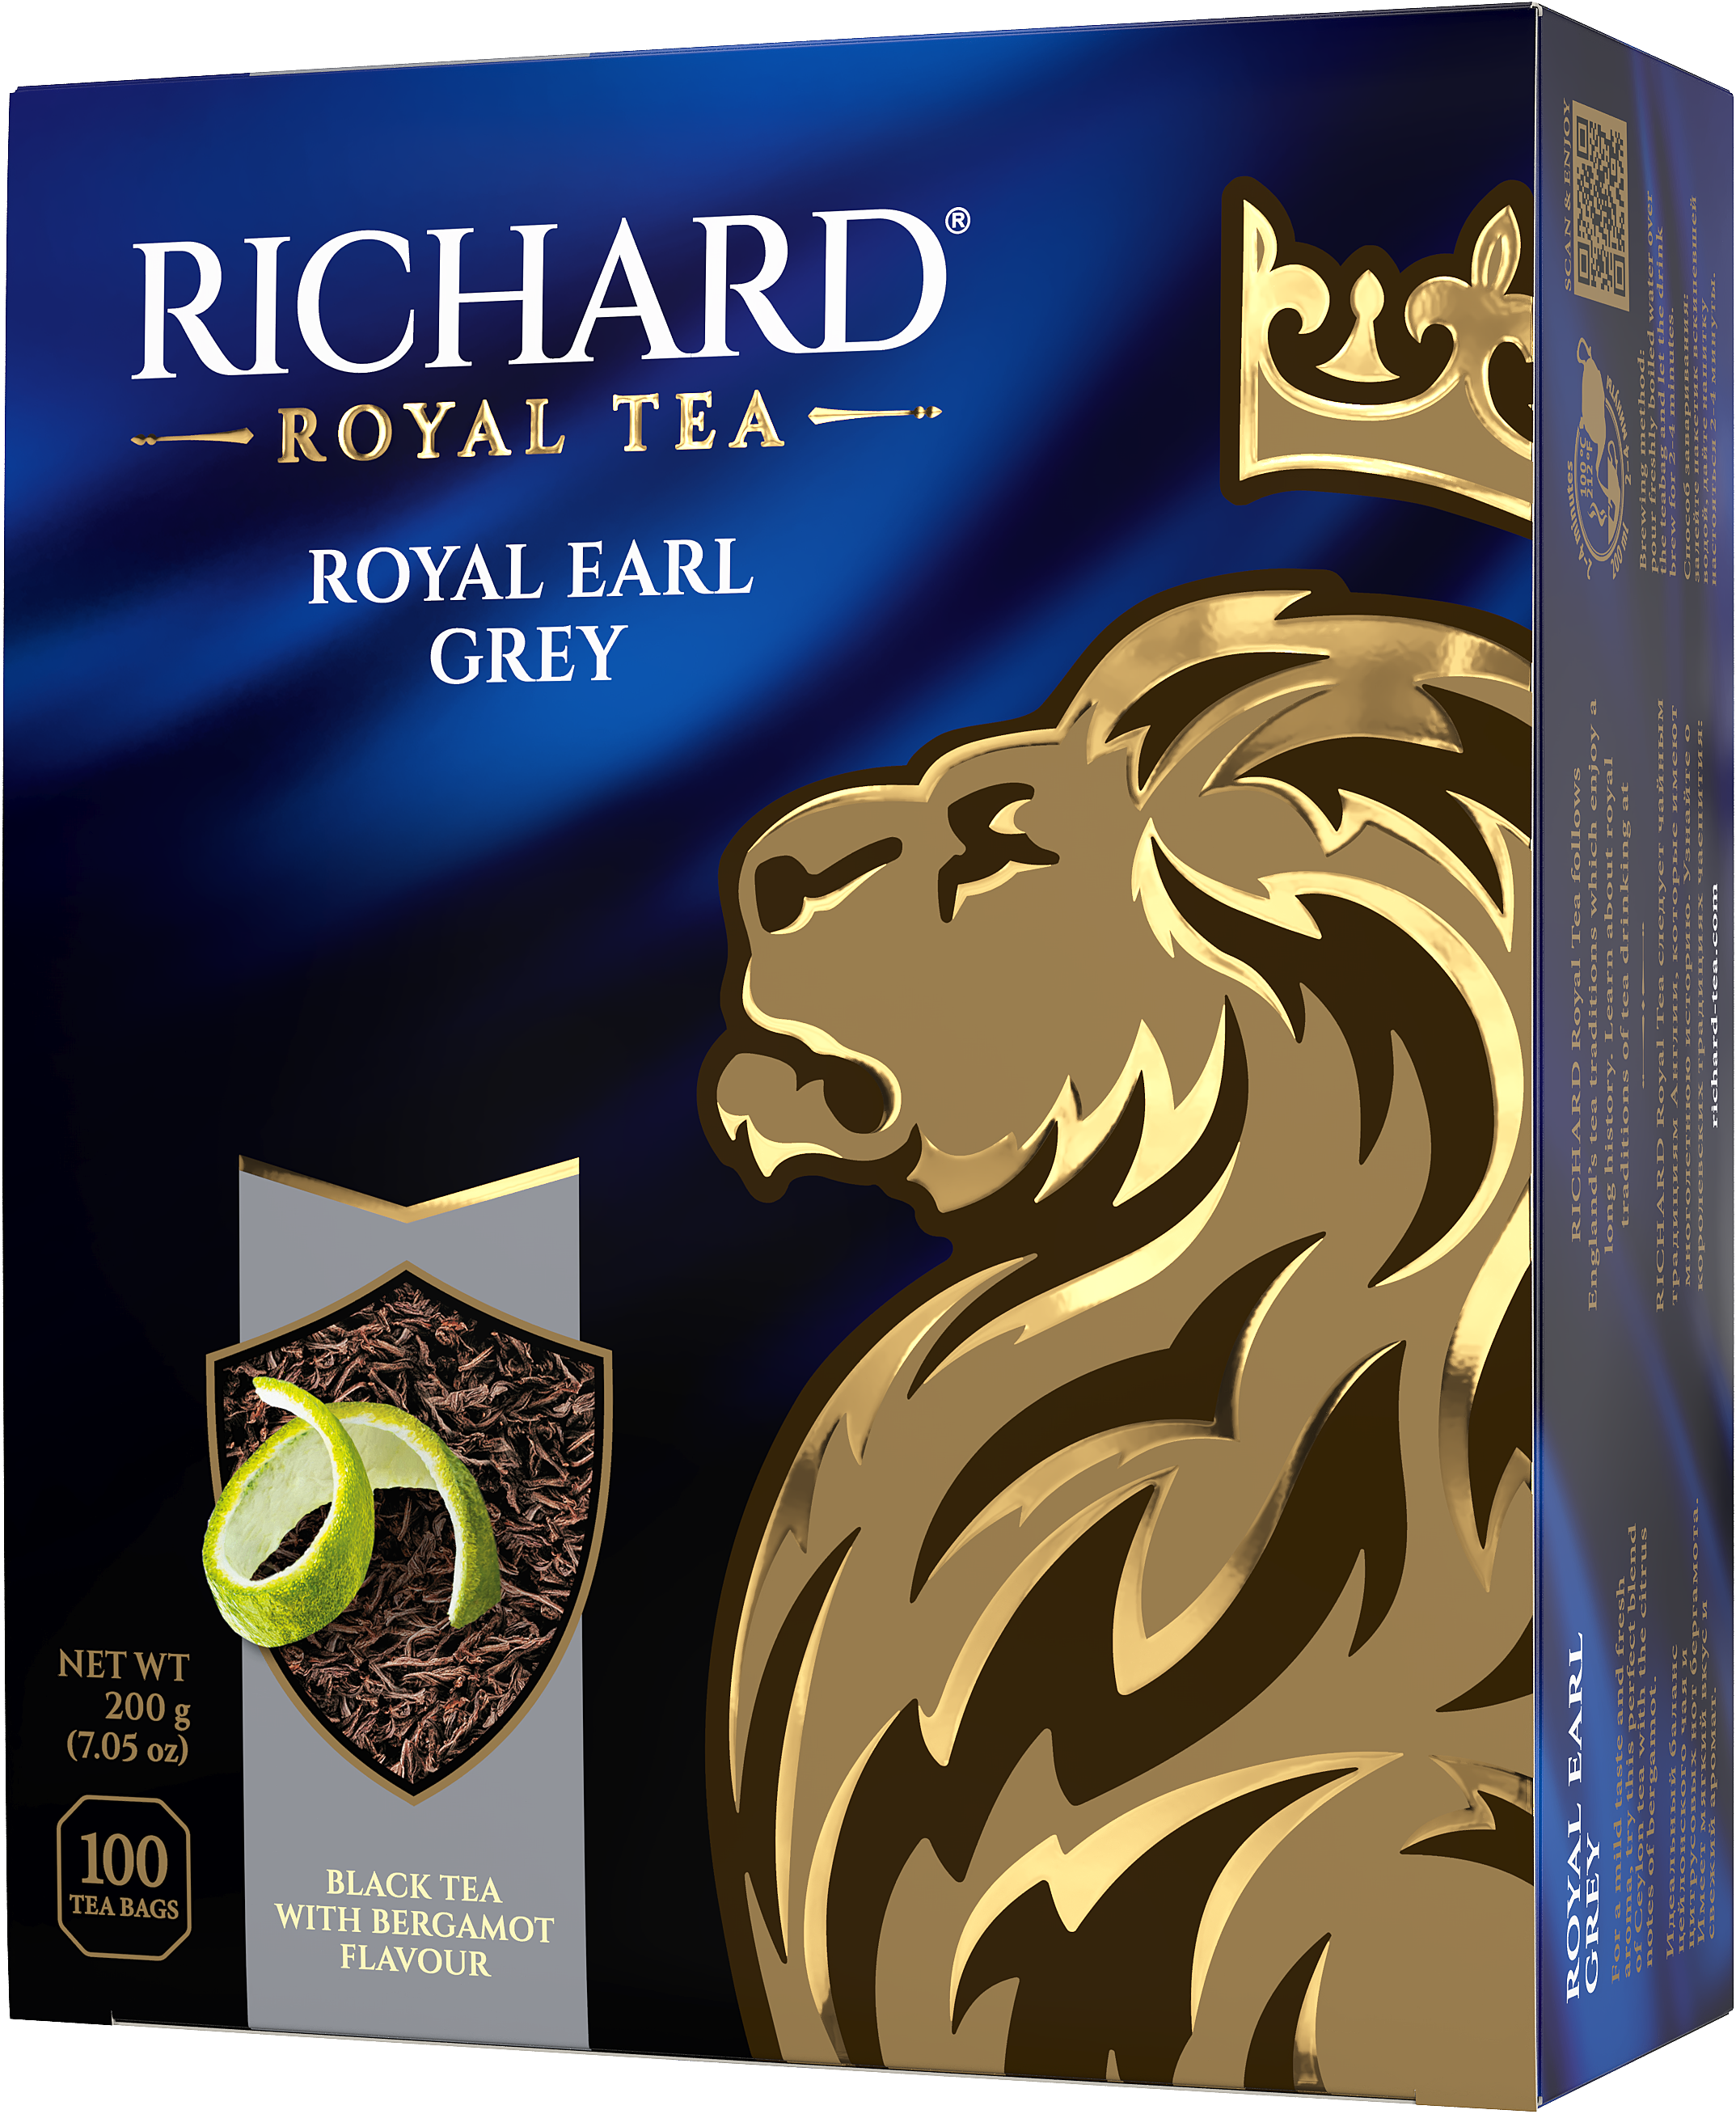 Richard "Royal Earl Grey" black tea flavored 100 sachets, 200g